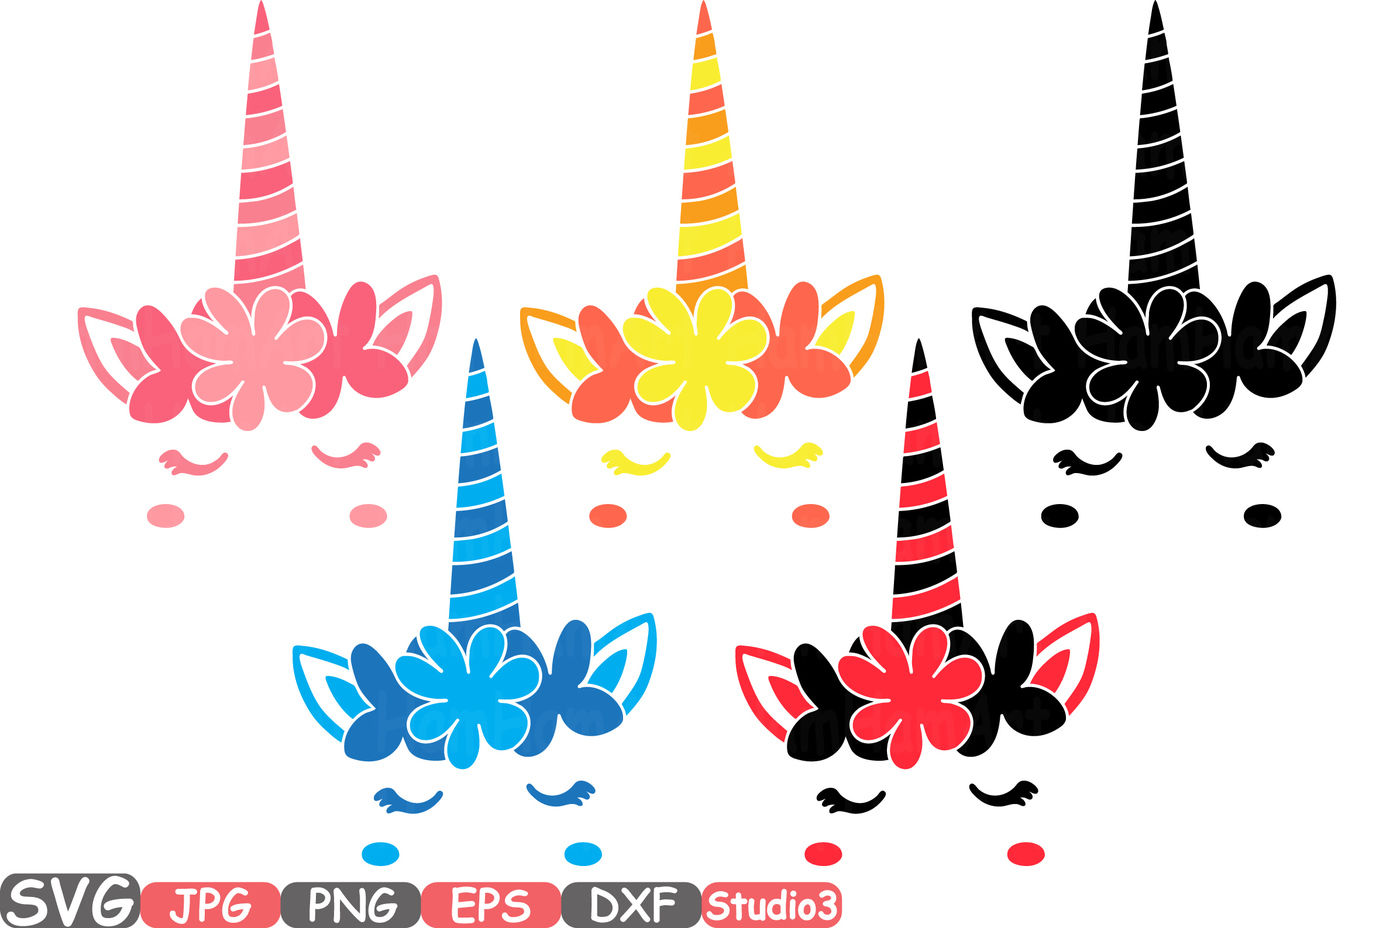 Download Flower Unicorn Monogram Silhouette SVG Cutting Files Digital Clip Art Graphic Studio3 cricut ...